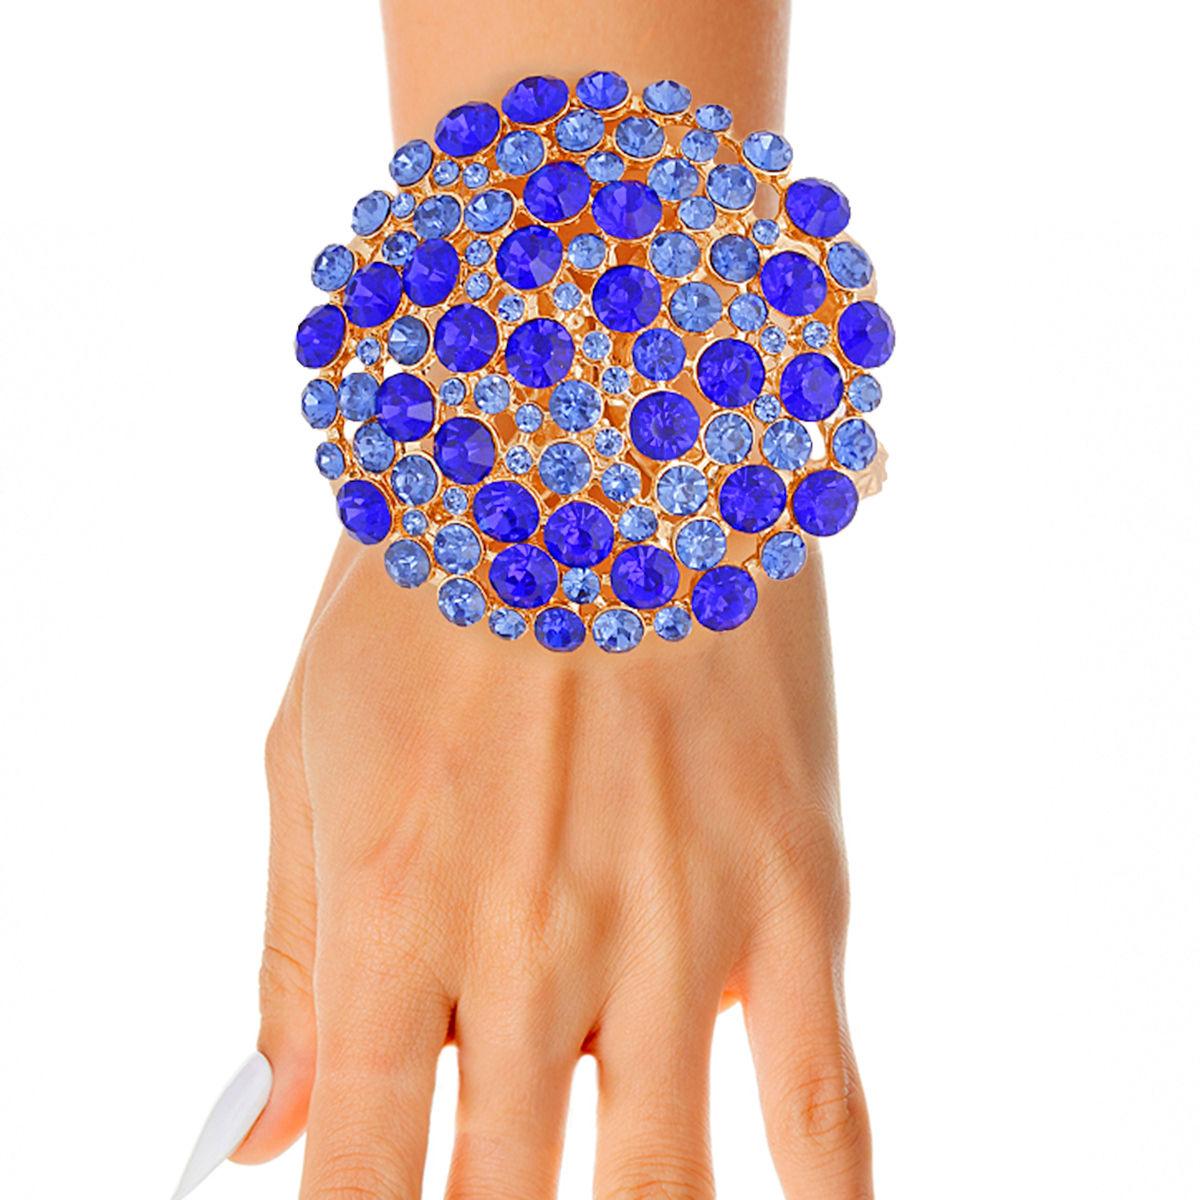 Blue Bouquet Domed Gold Cuff Bracelet: Dazzle Your Style